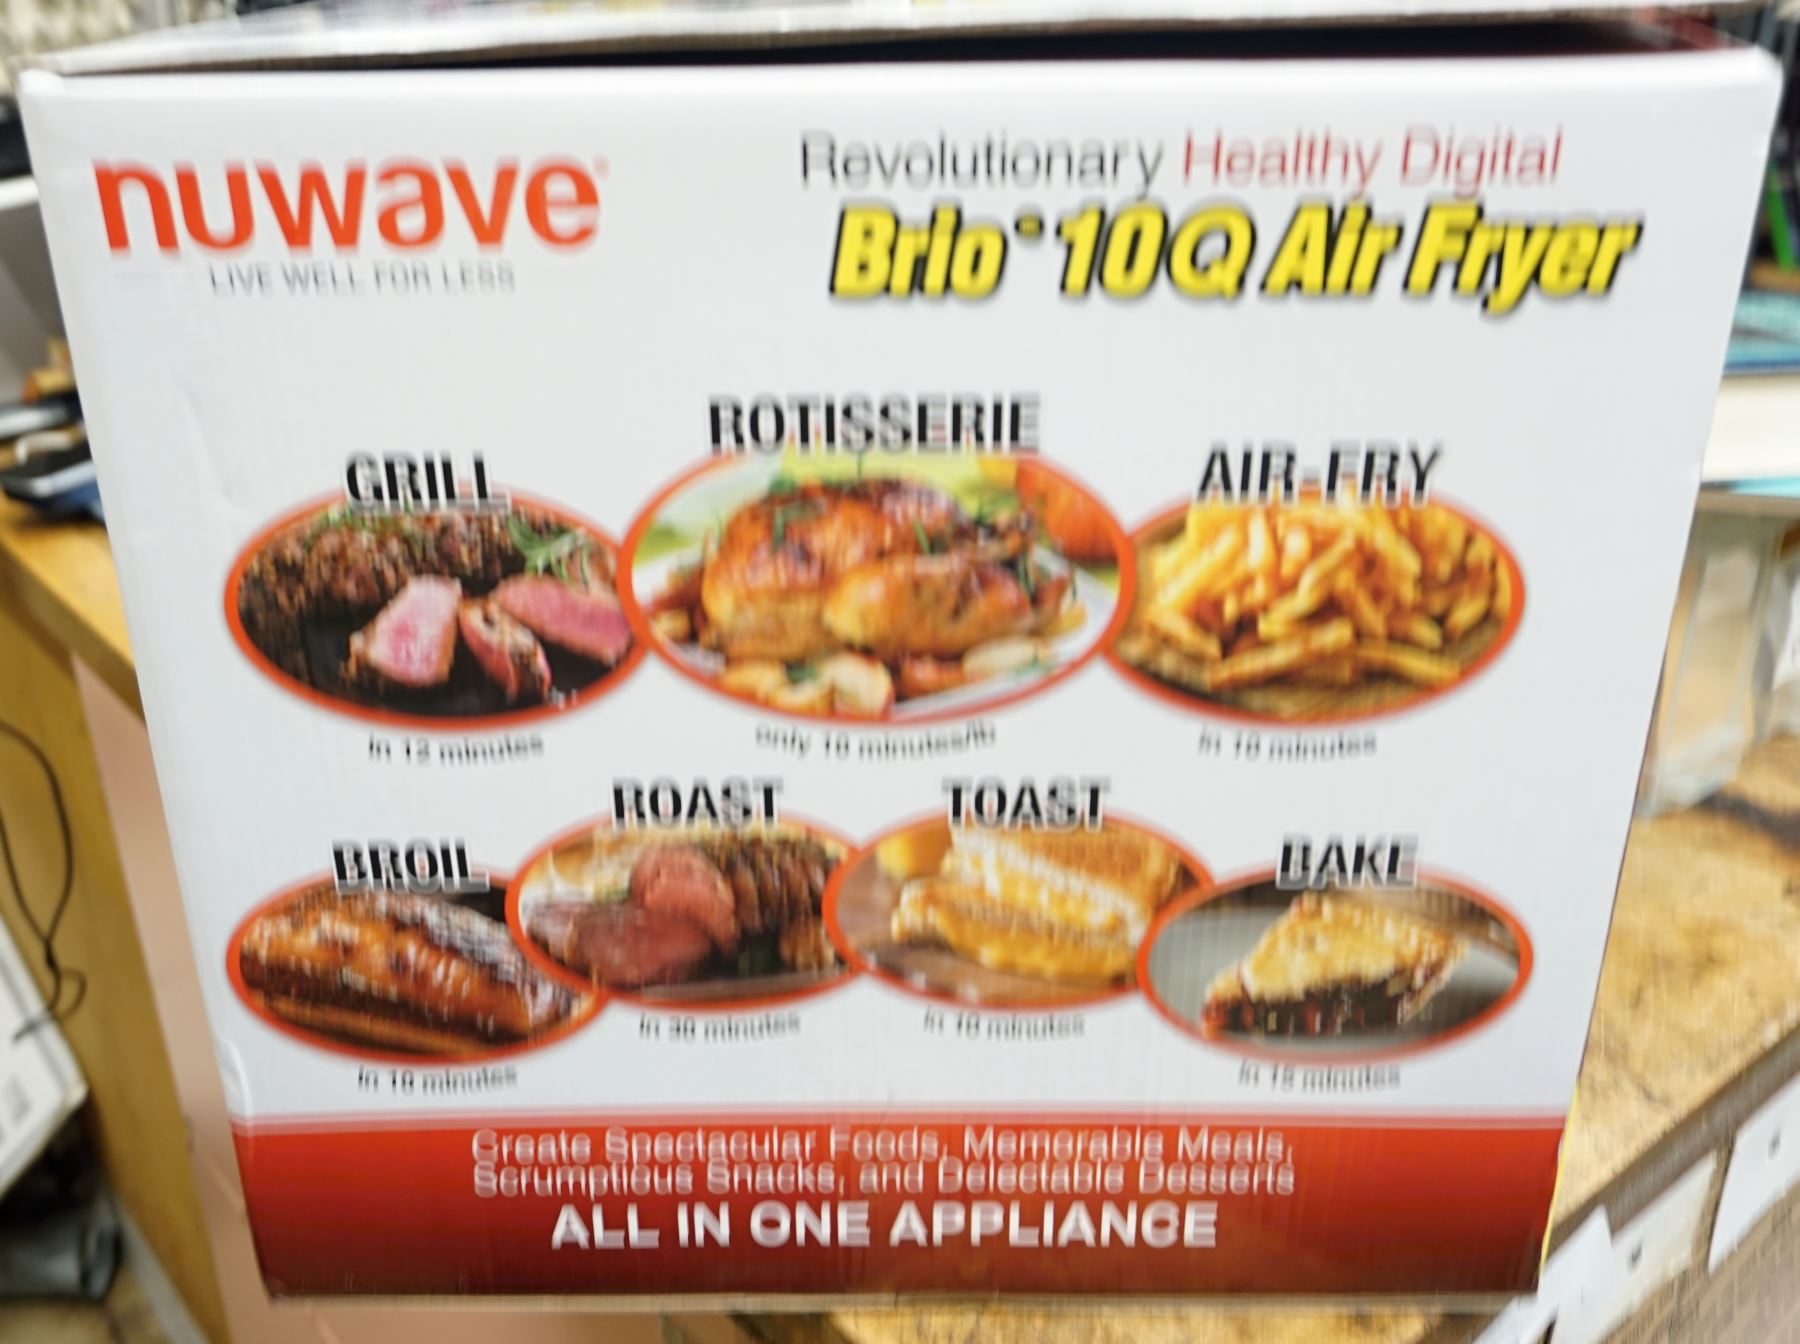 Nuwave Revolutionary Healthy Digital Brio 10QT Model 37101 Air